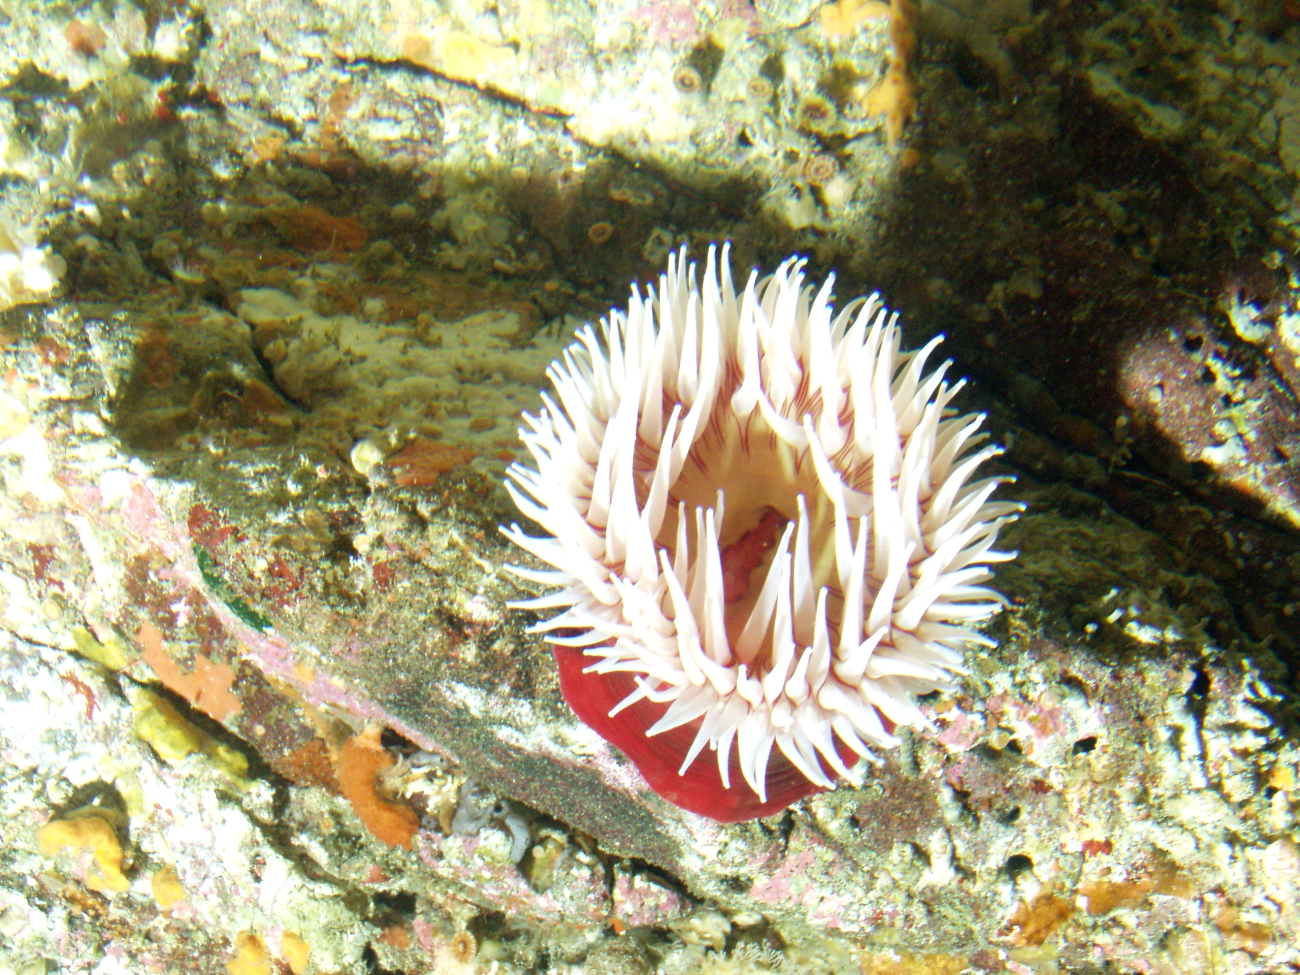 Fish eating sea anemone (Urticina piscivora) on boulder in rocky habitatat 64 meters depth